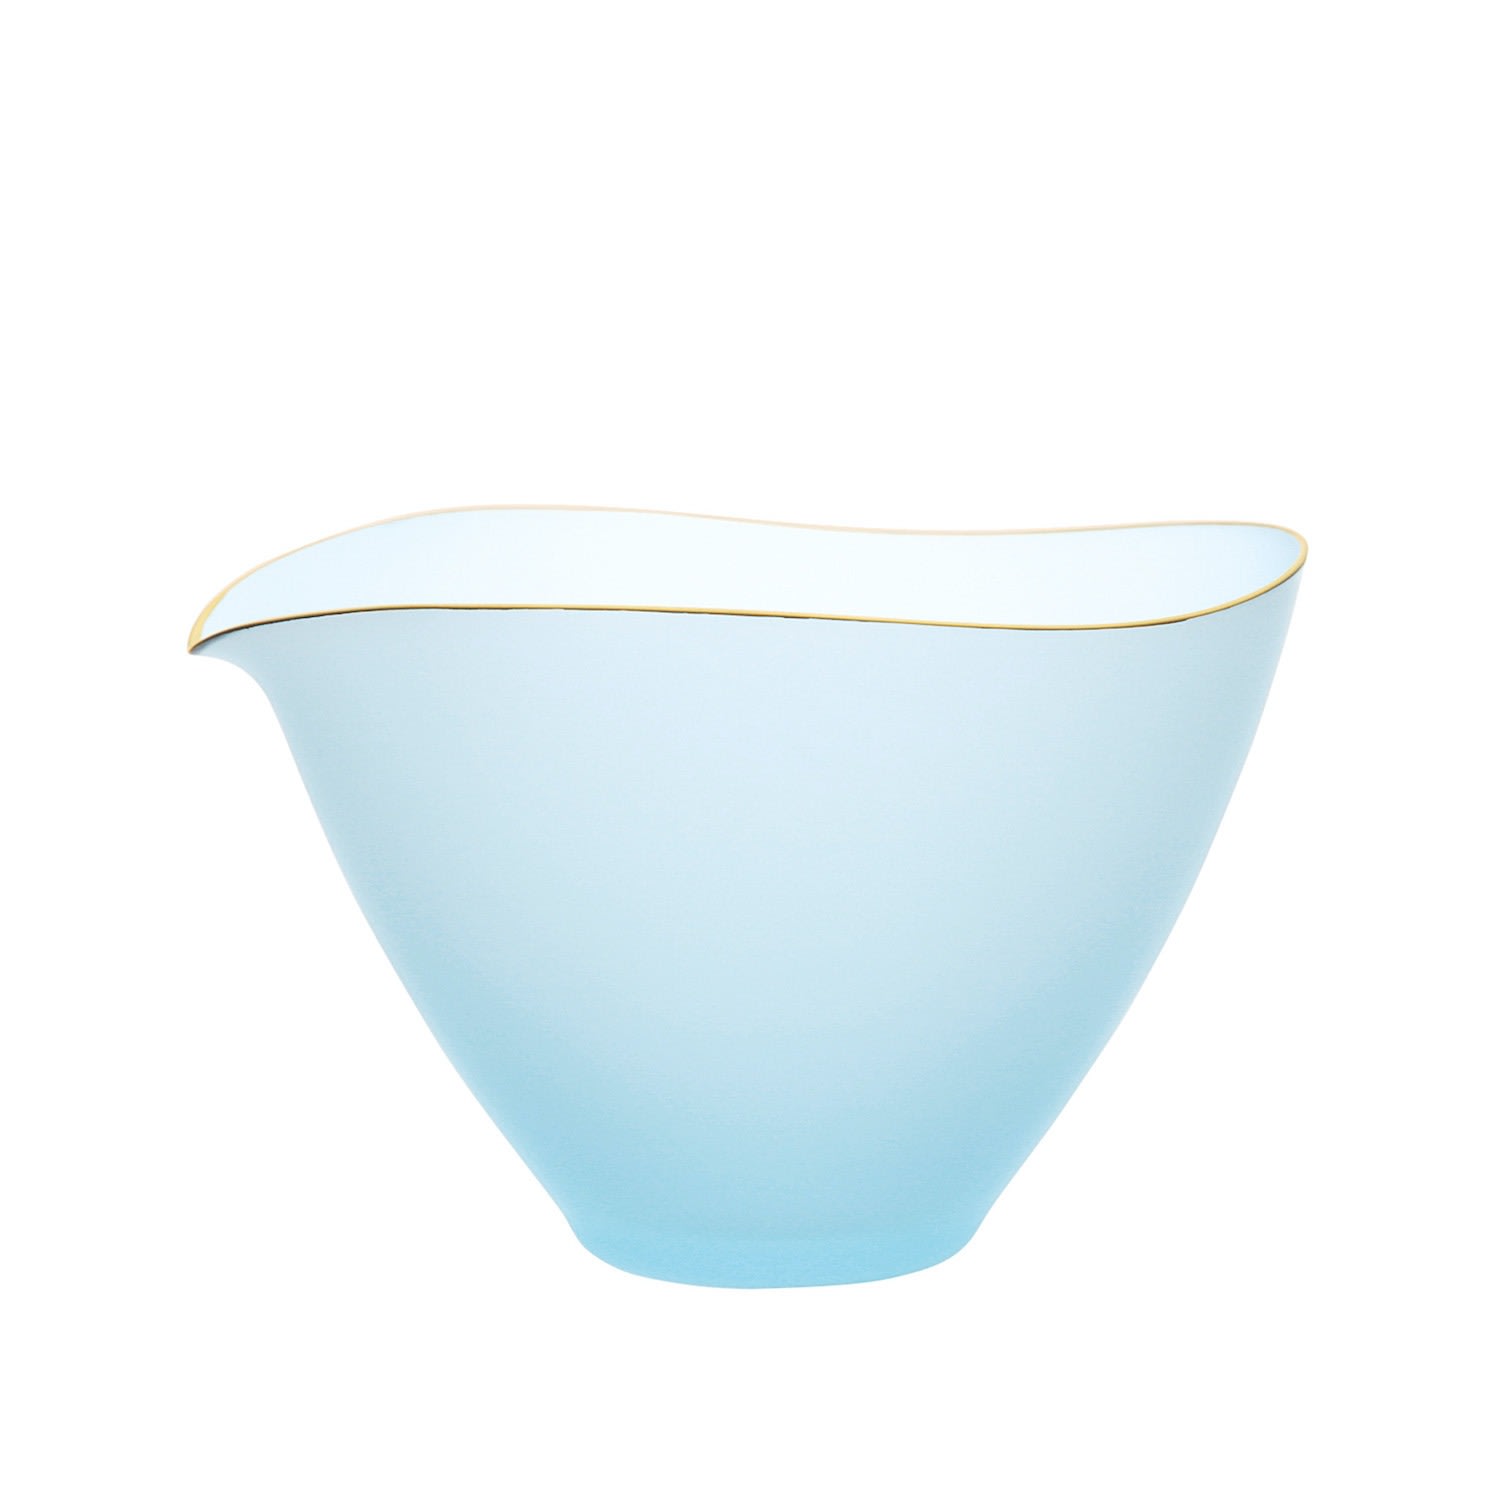 Saki Handcrafted Glass Sake Carafe/Bowl With Gold Rim - Blue 4.4" Sghr Sugahara